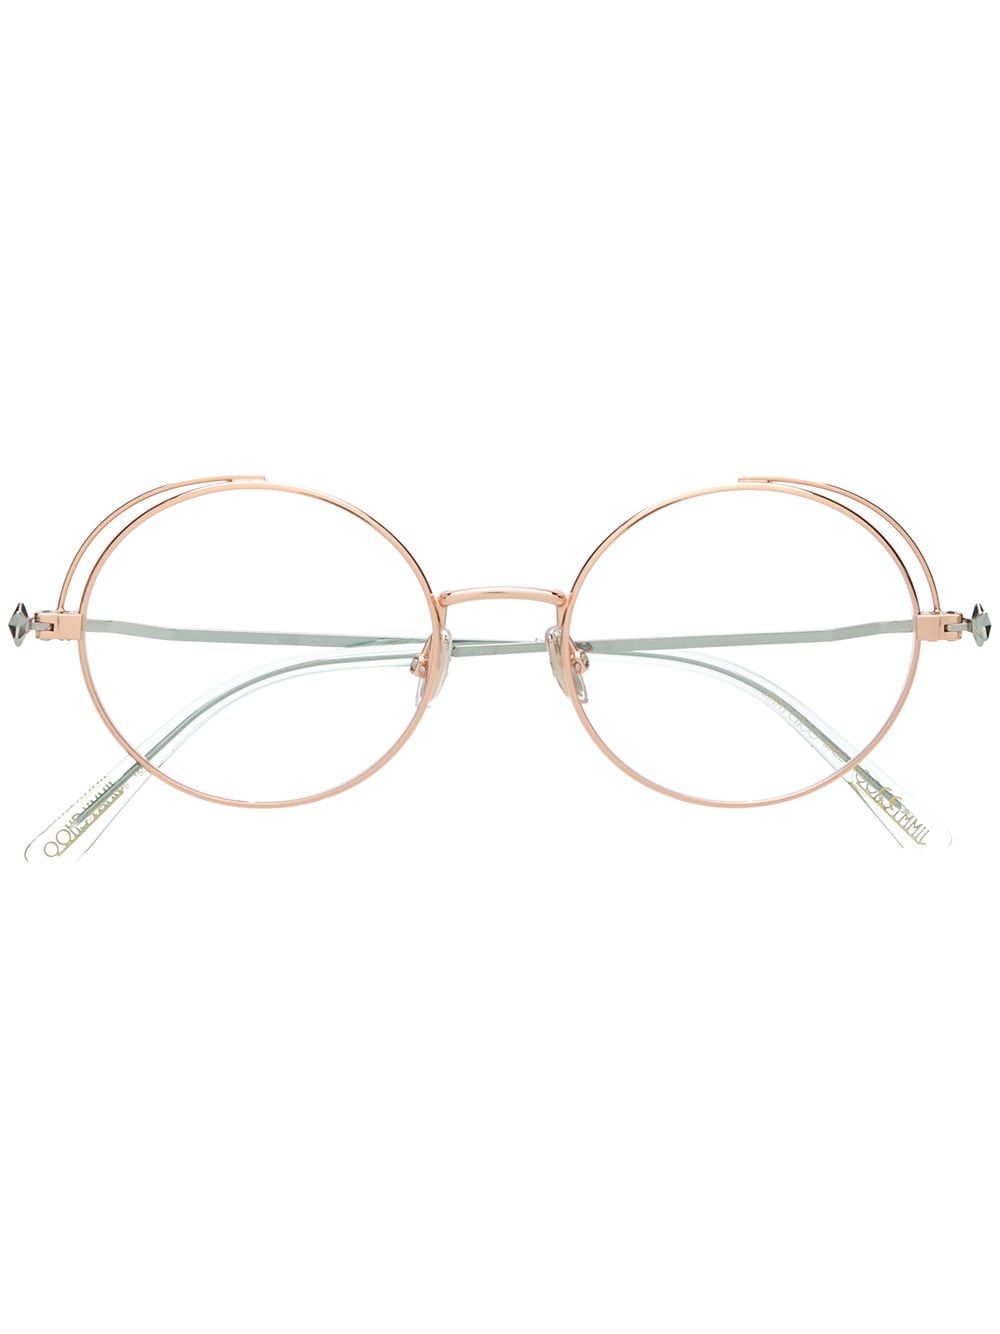 Jimmy Choo Eyewear Sun round frame glasses - Gold von Jimmy Choo Eyewear